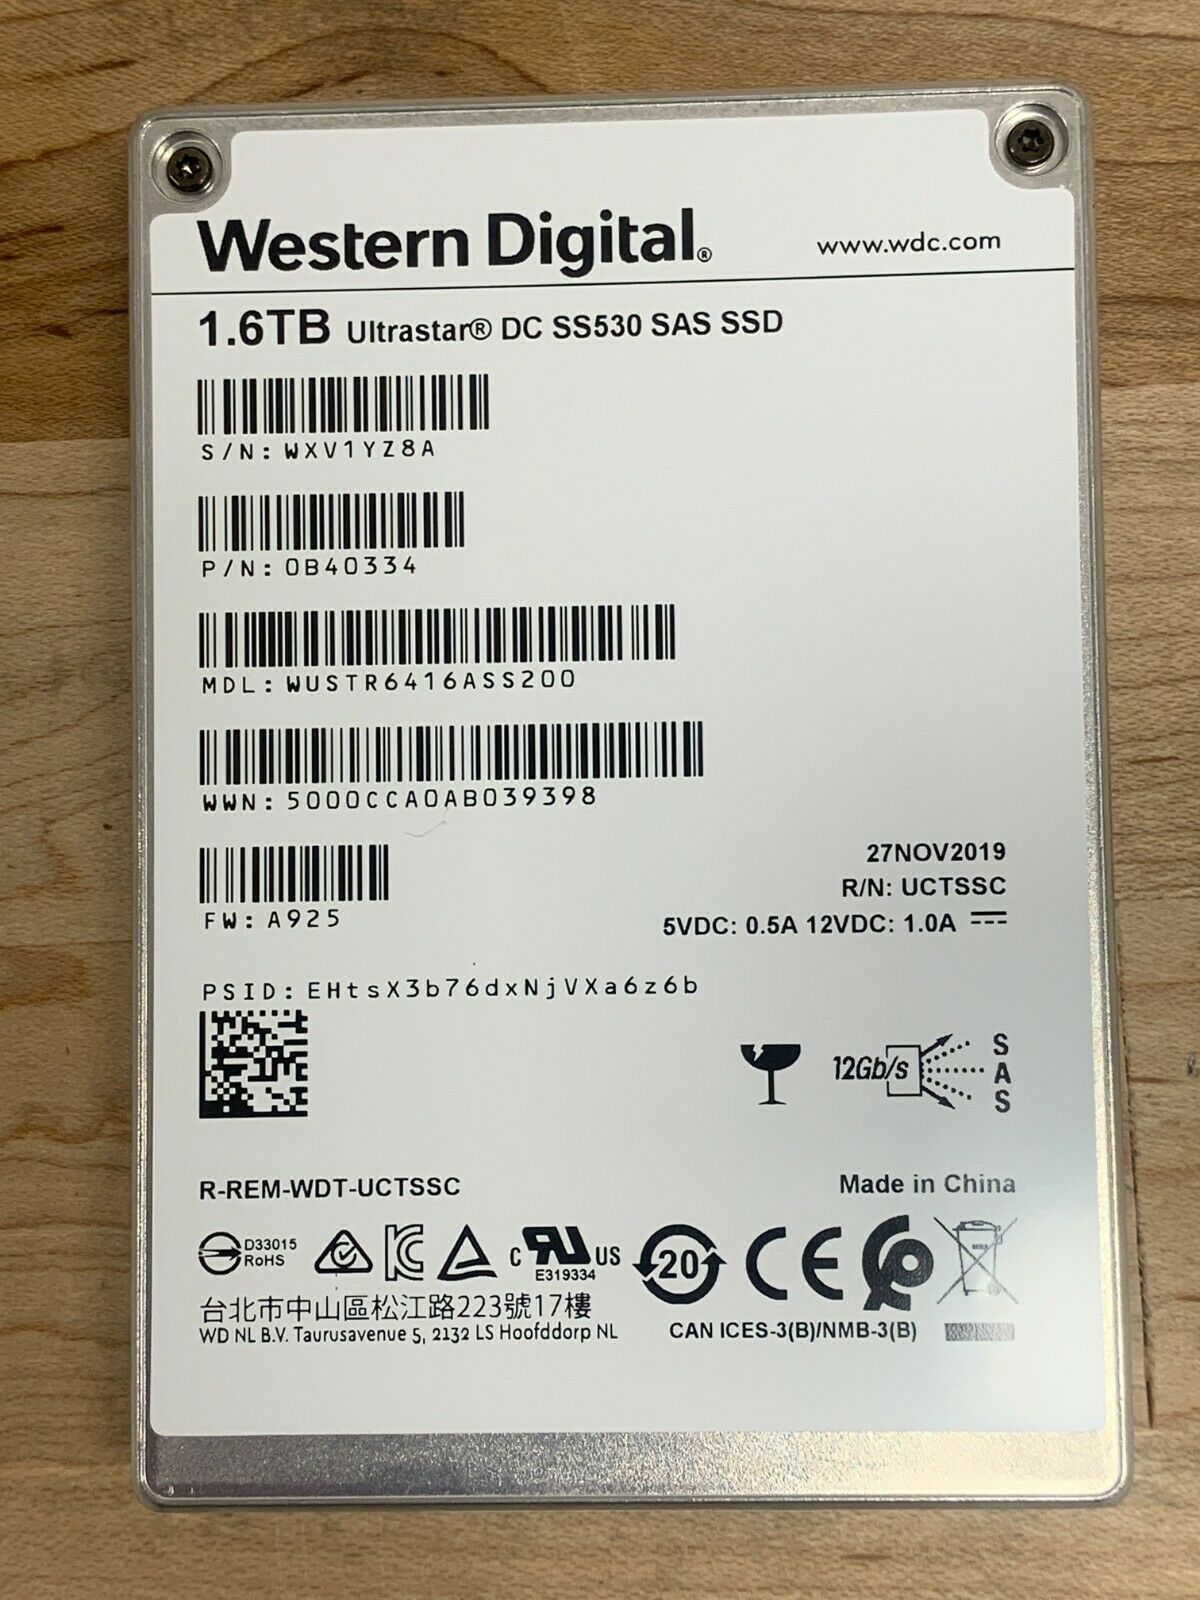 WUSTR6416ASS200 0B40334 Western Digital Ultrastar SS530 1.6TB SAS 12Gb 2.5" SSD